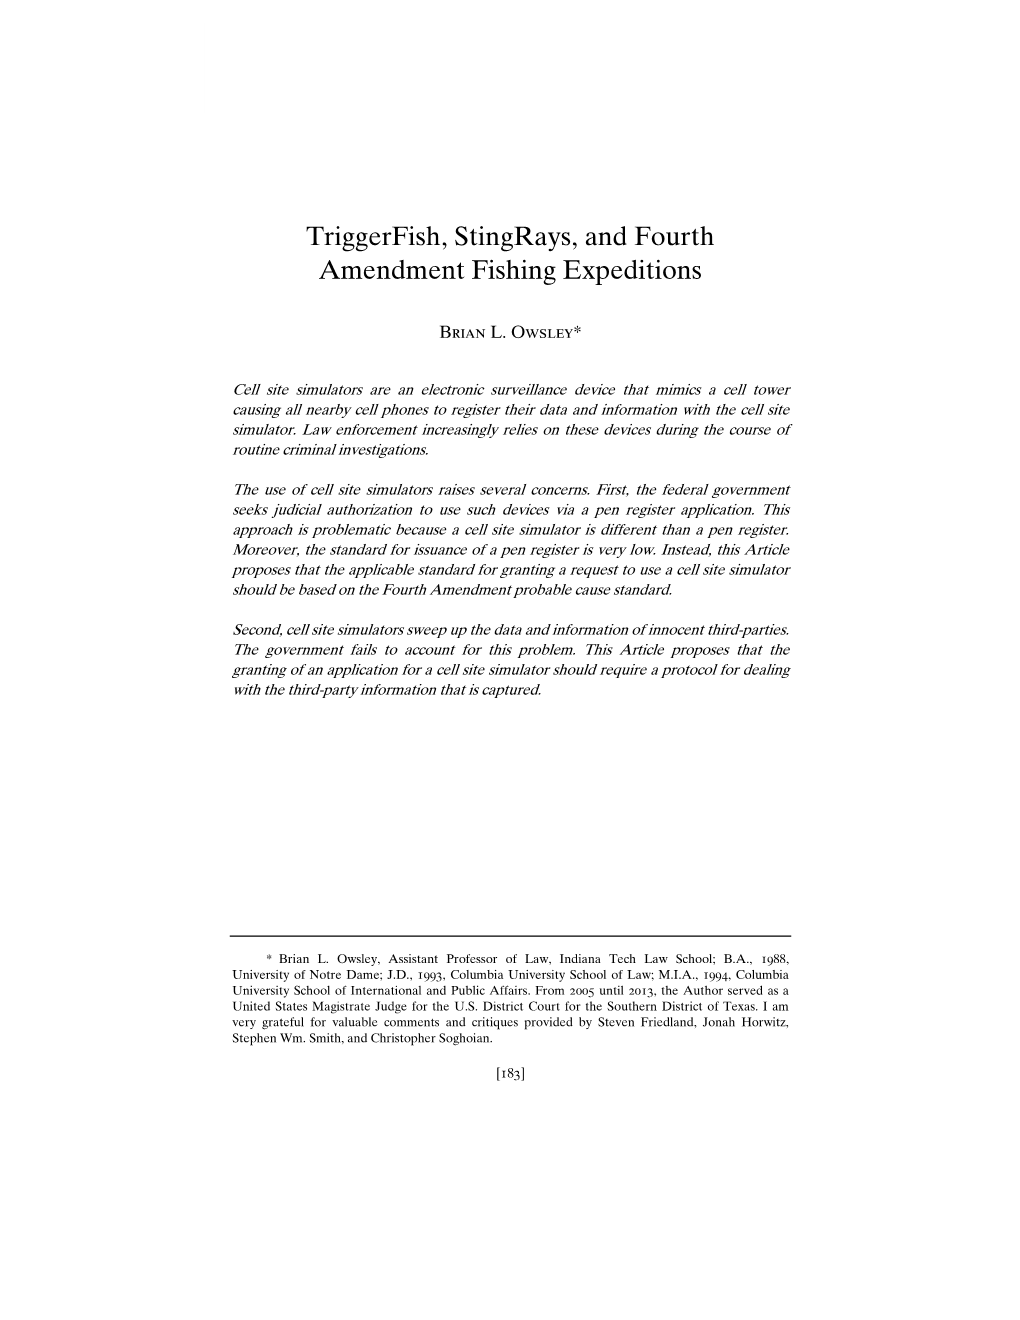 Triggerfish, Stingrays, and Fourth Amendment Fishing Expeditions